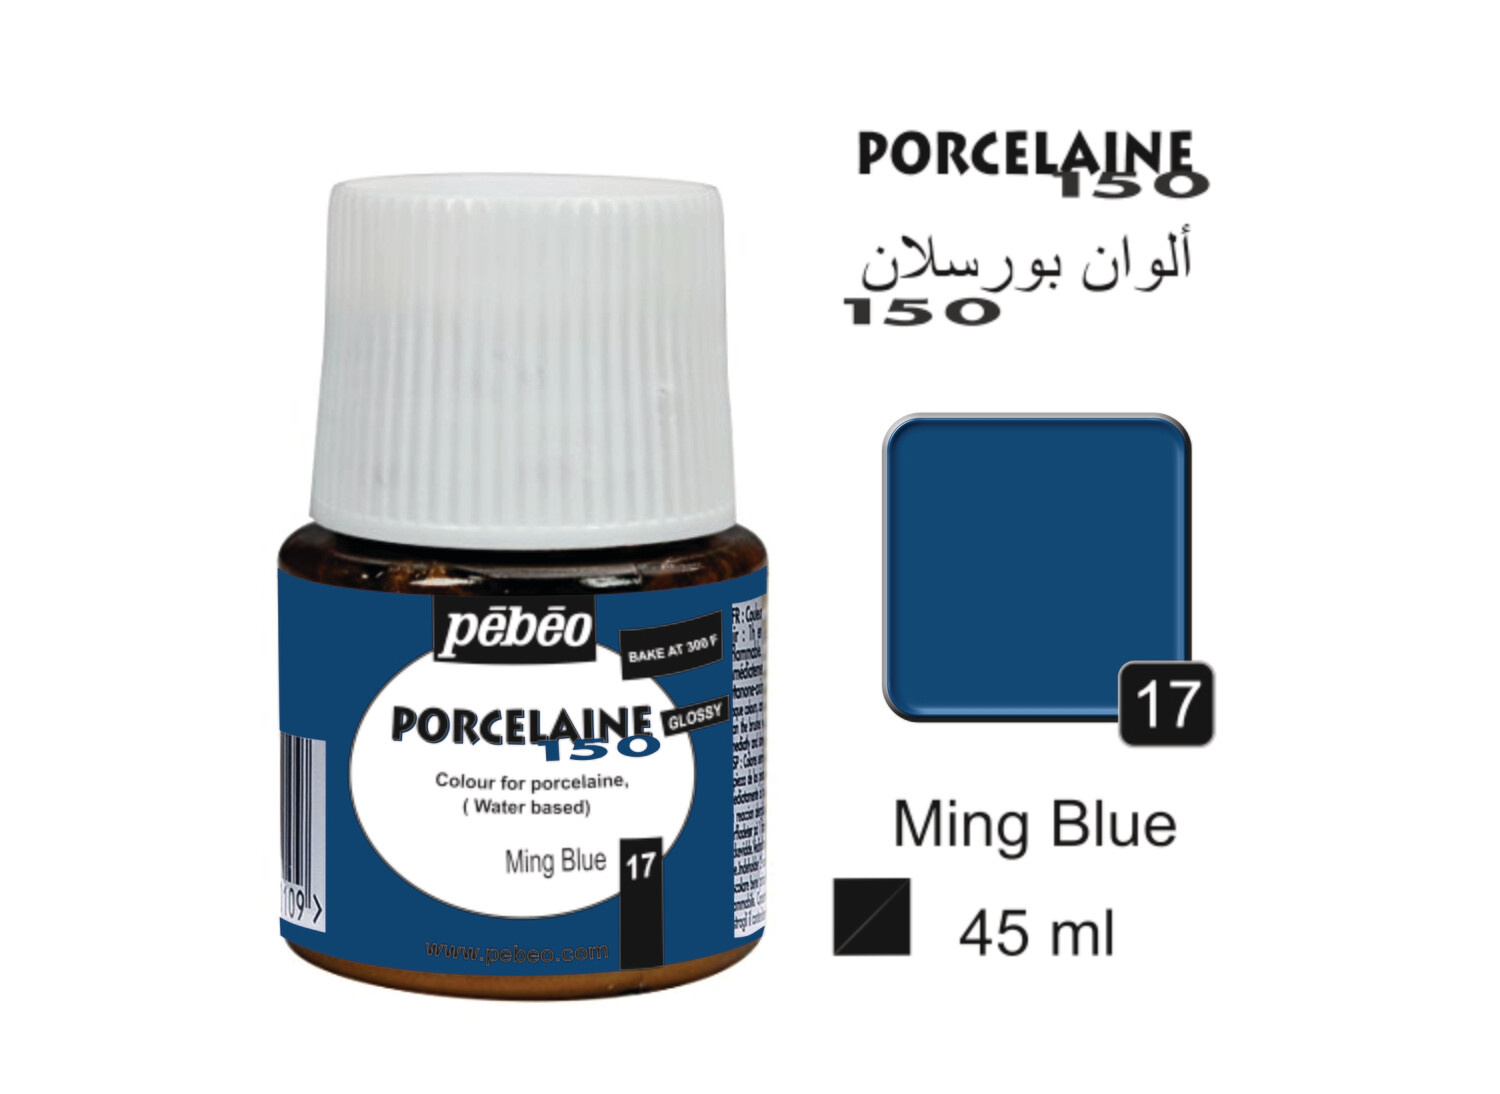 PORCELAINE 150, GLOSS 45 ml, Ming blue No. 17